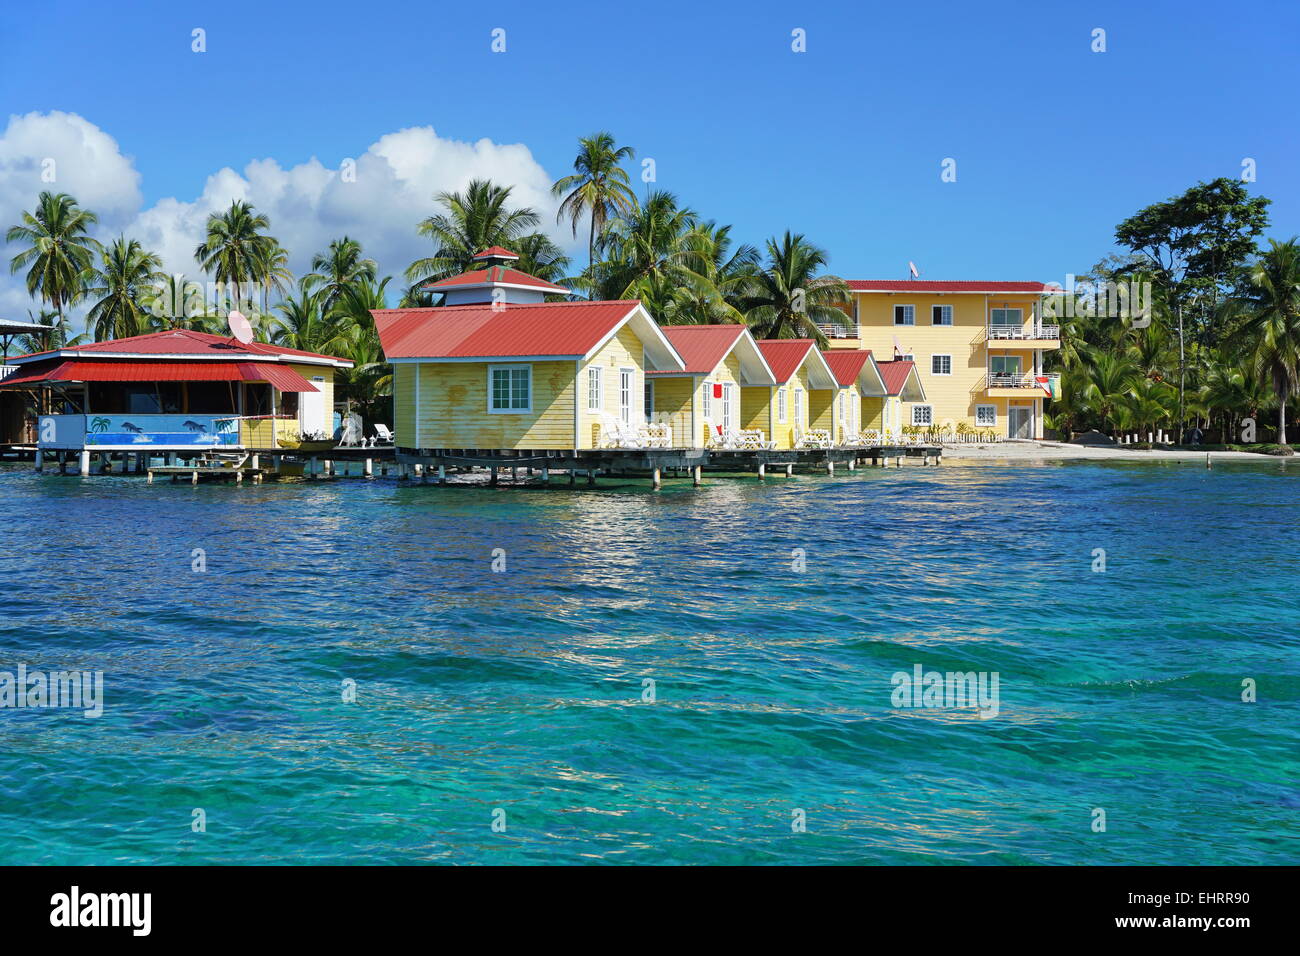 Tropical resort with cabin over water of the Caribbean sea, Carenero island, Bocas del toro, Panama, Central America Stock Photo